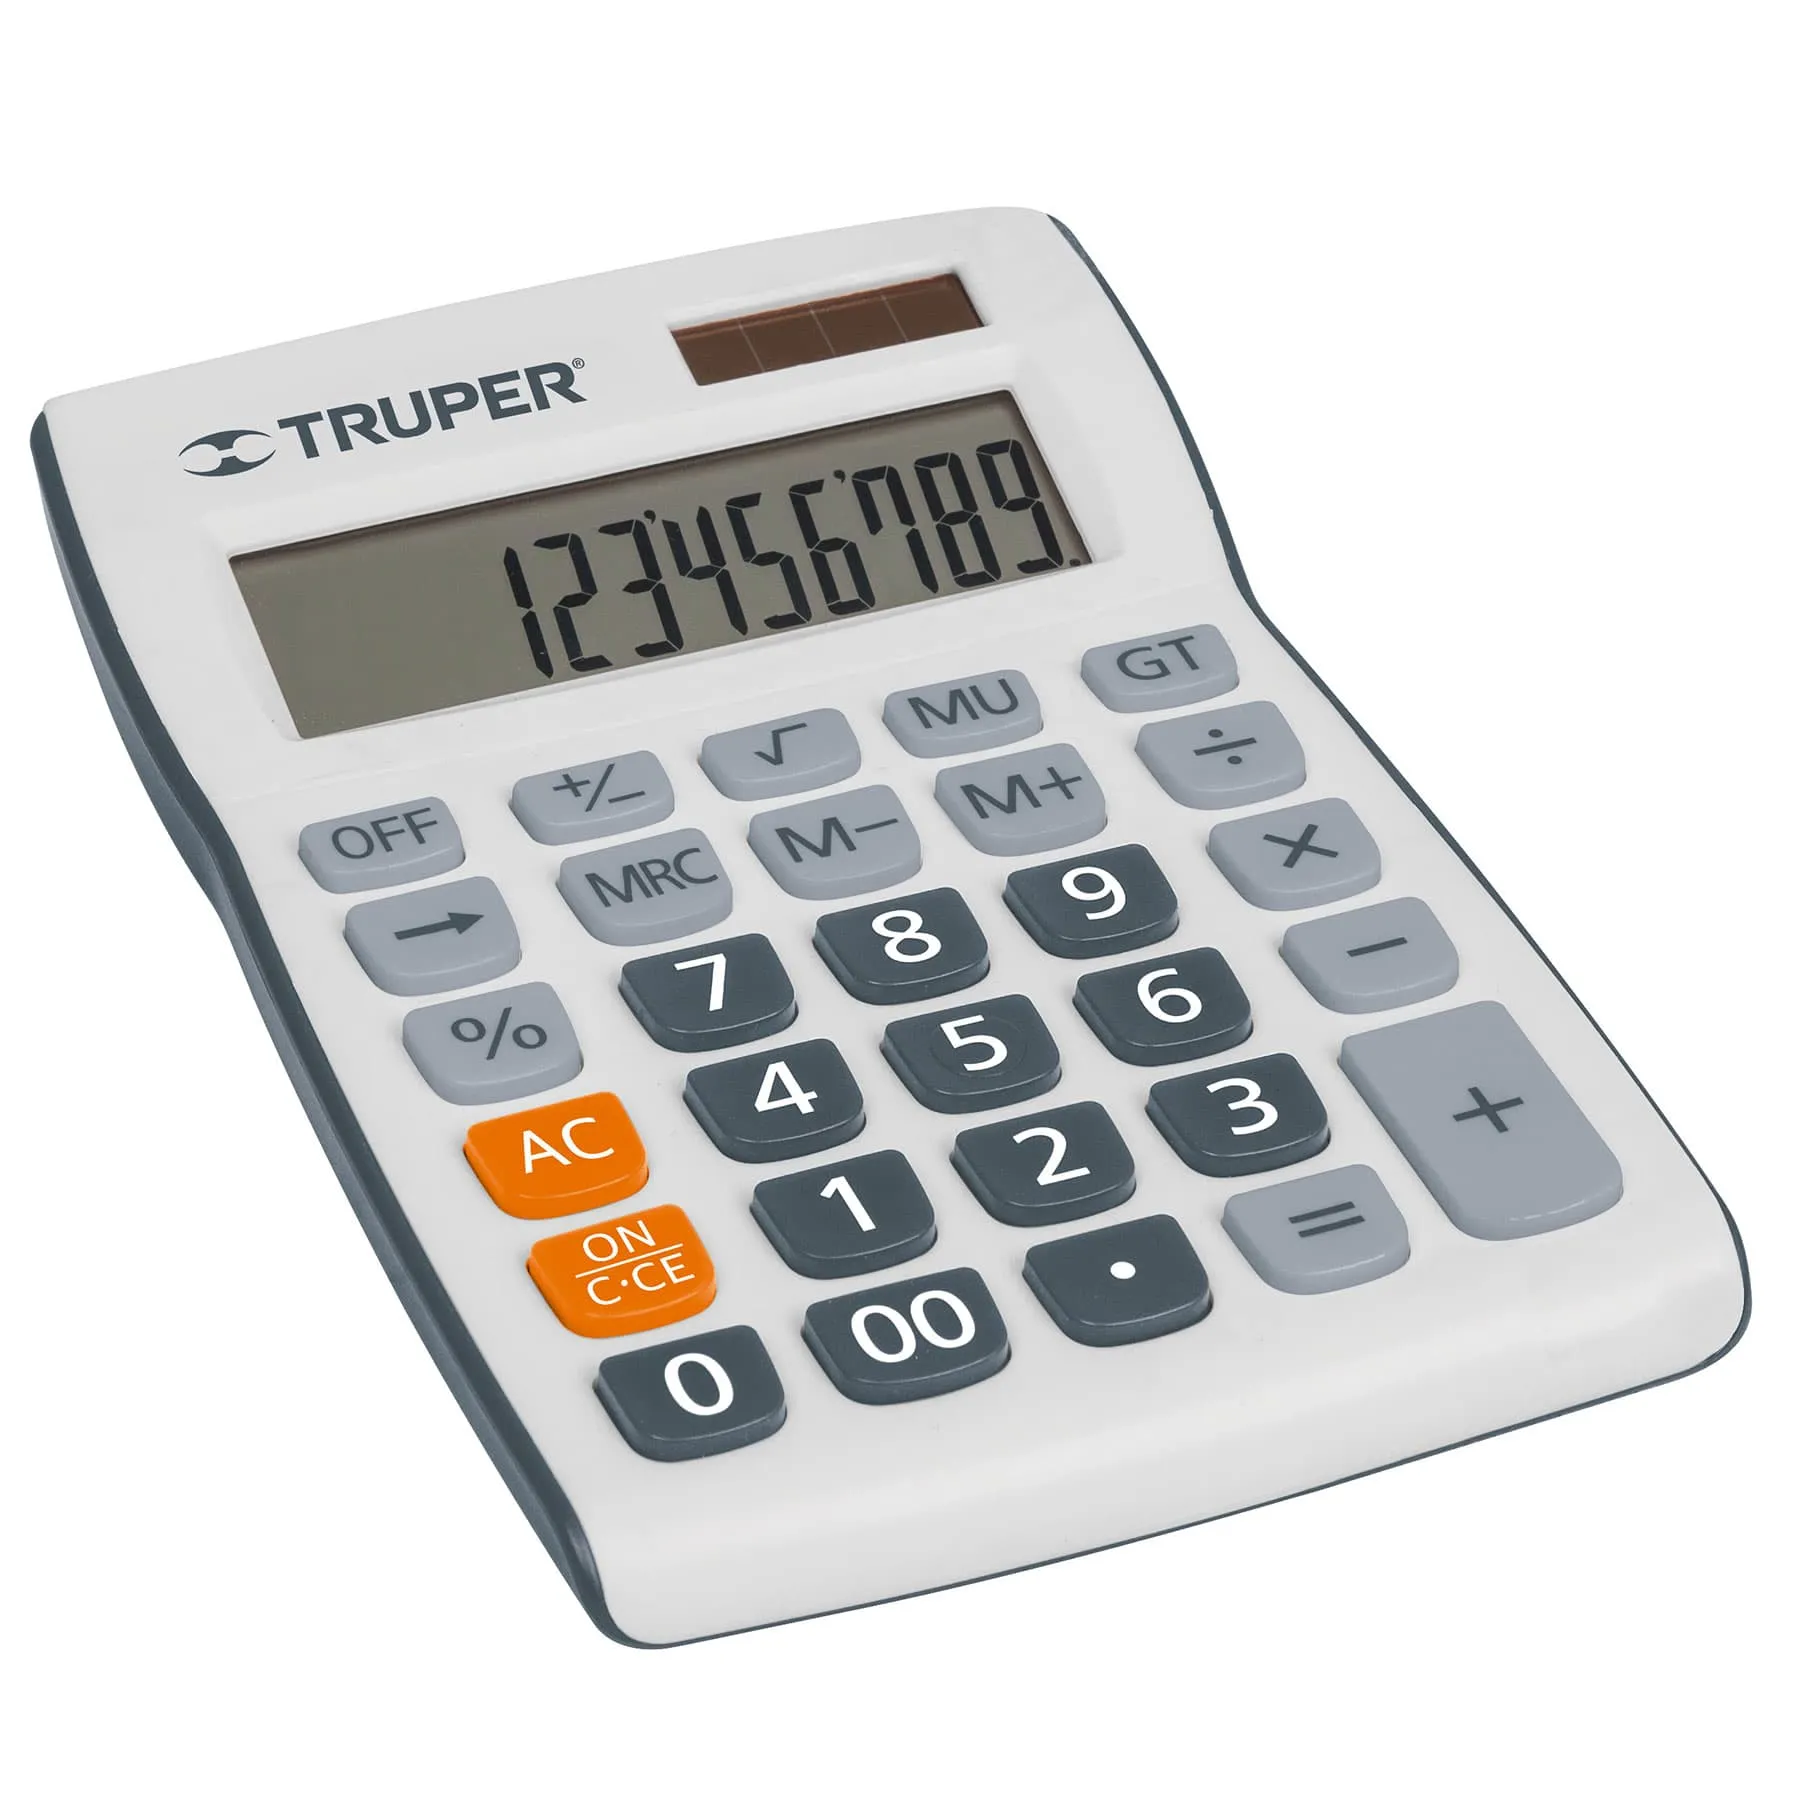 Calculadora De 19 Cm X 13 Cm Para Oficina, Negocio Y Hogar Truper